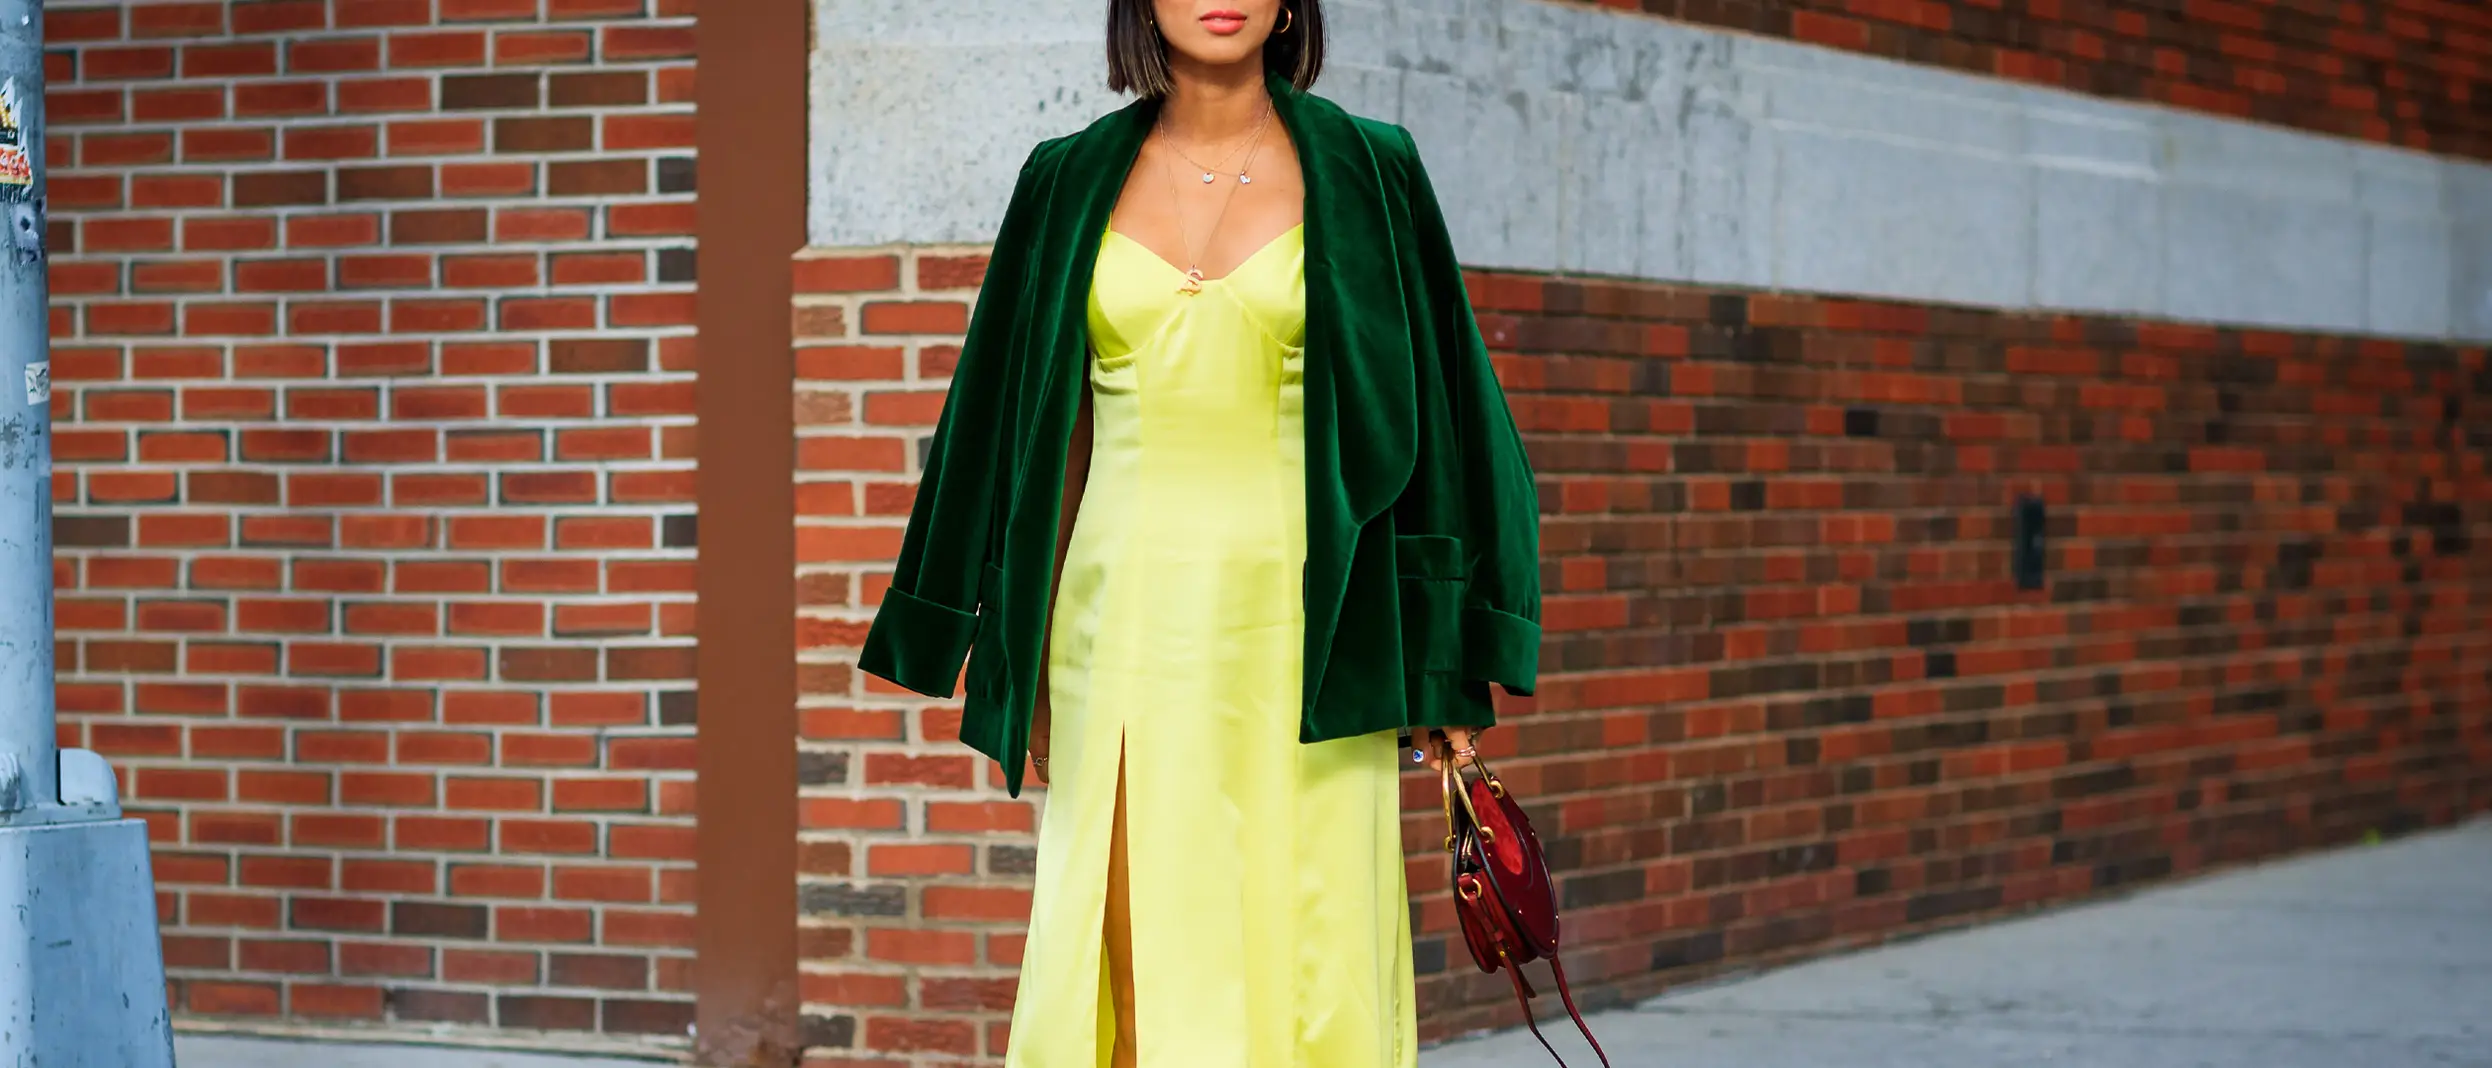 woman-in-yellow-dress-and-green-coat.jpg